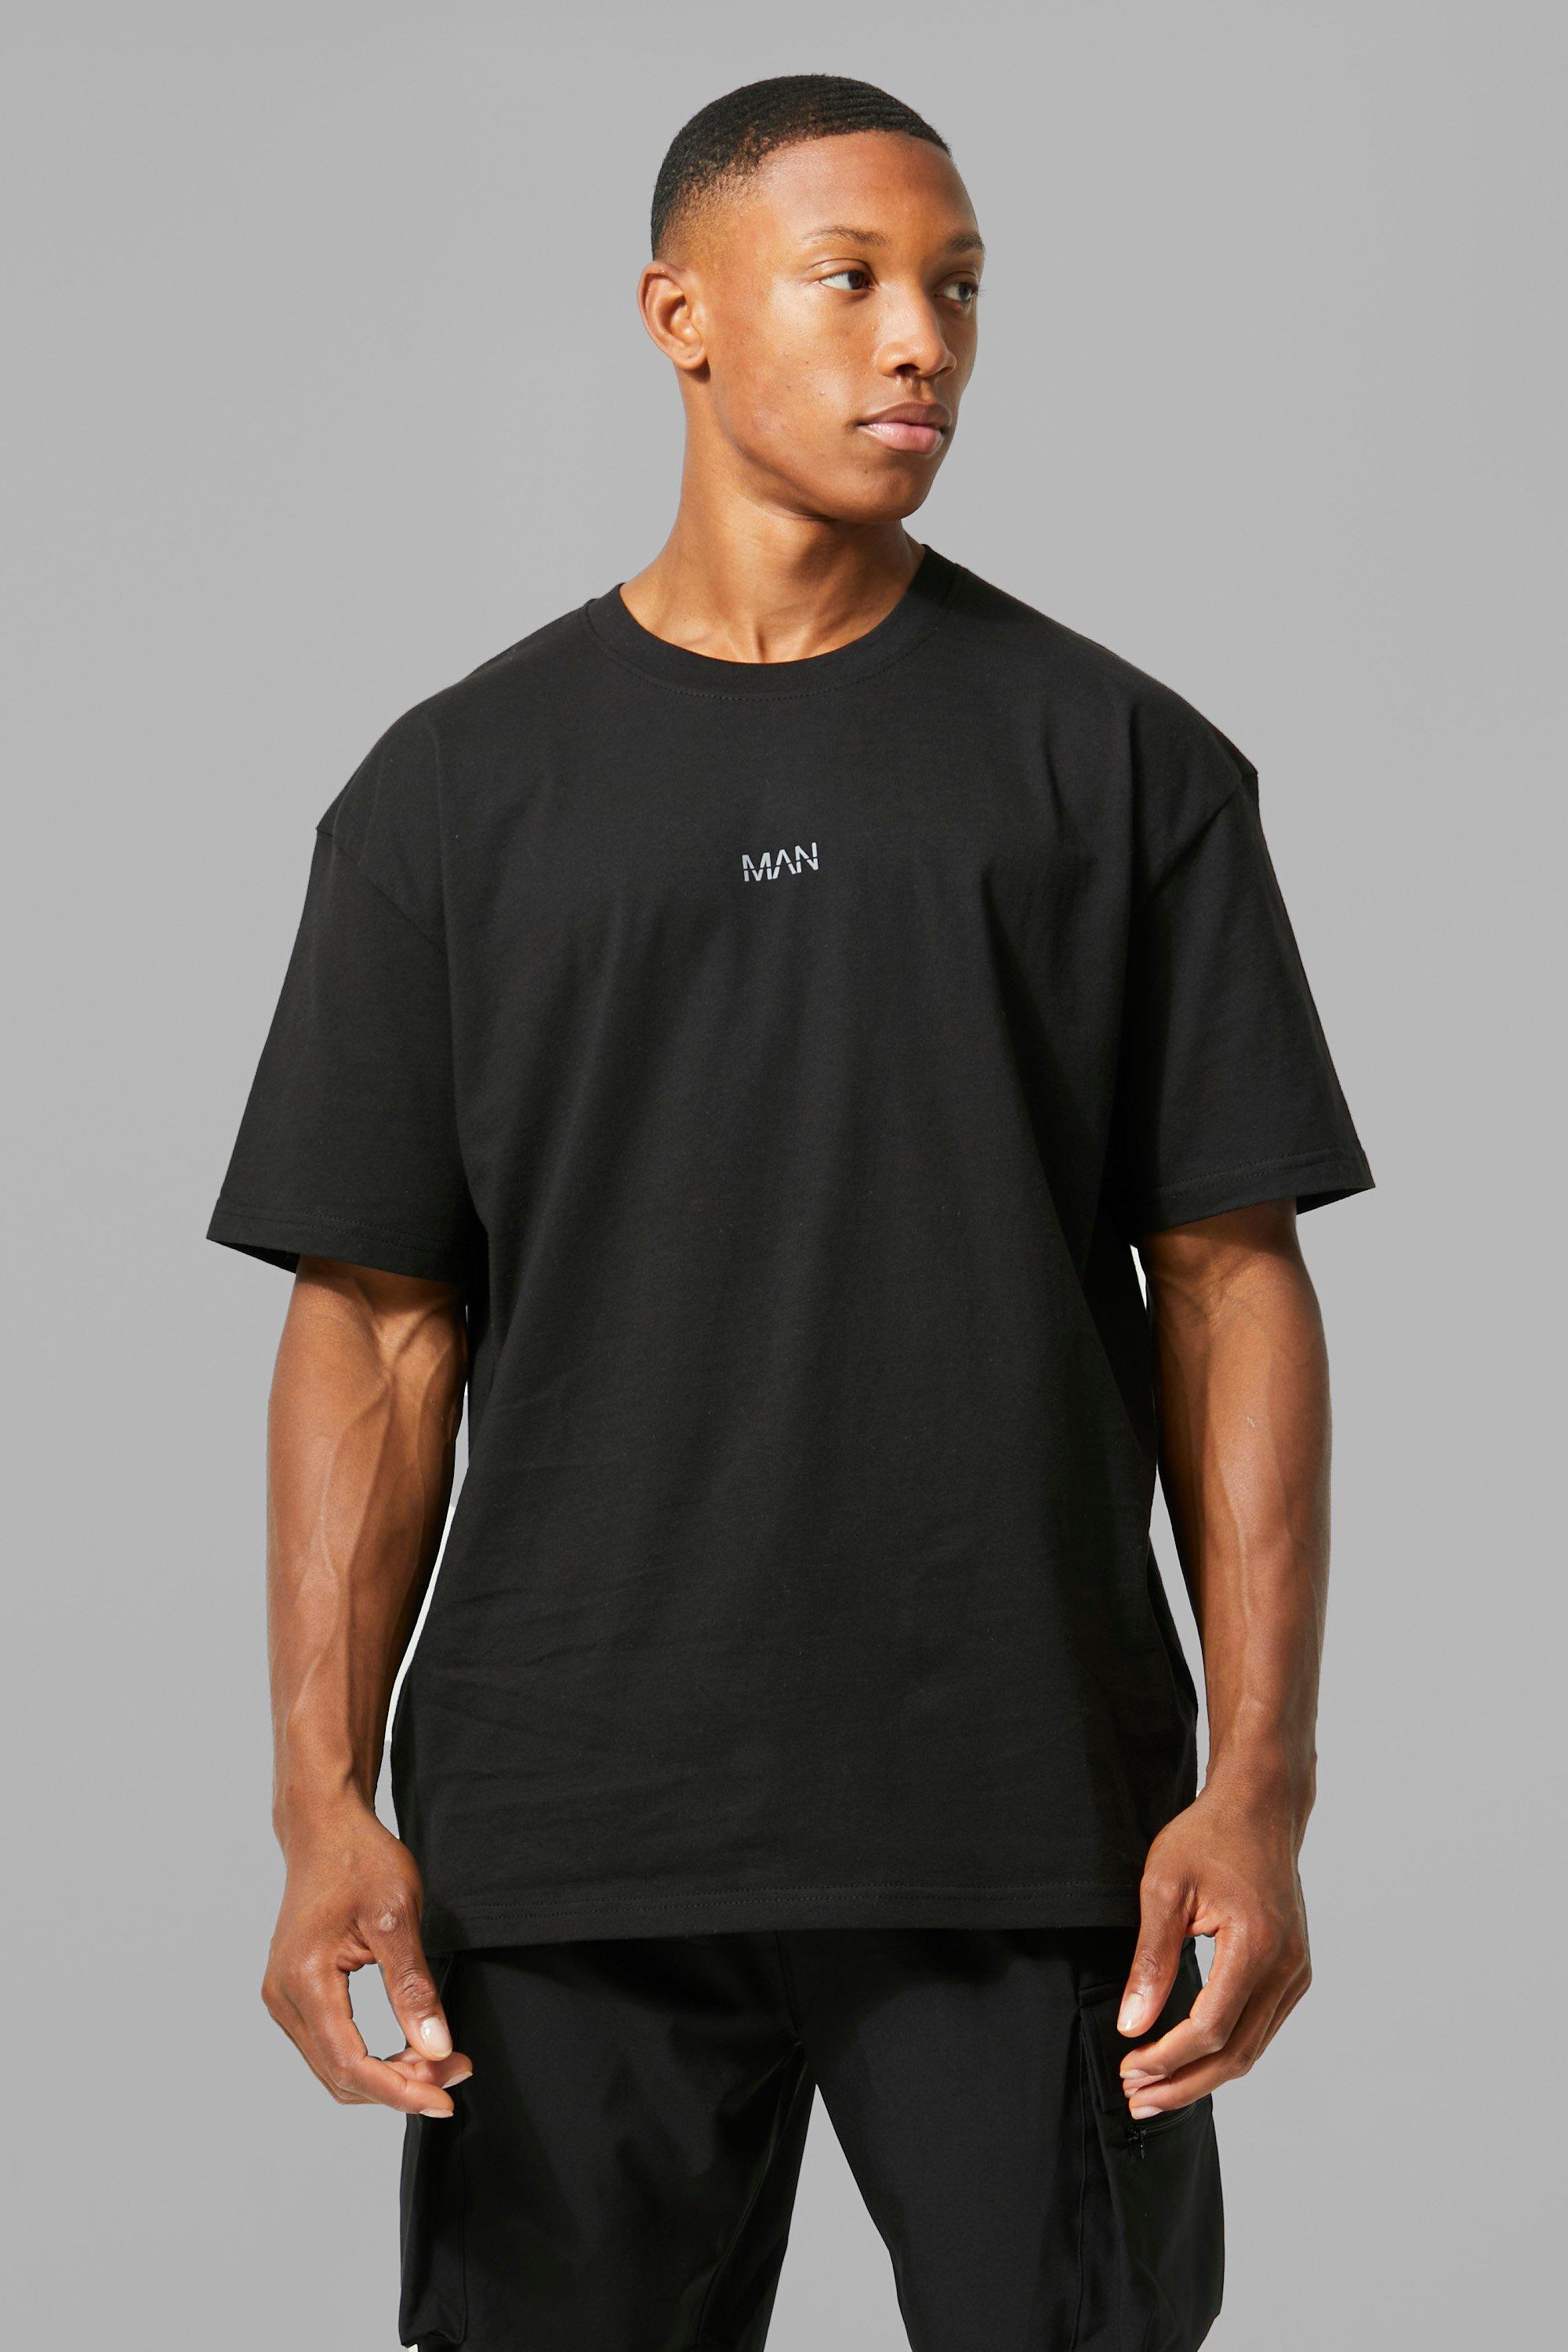 womens man active gym basic oversized t-shirt - black - xs, black